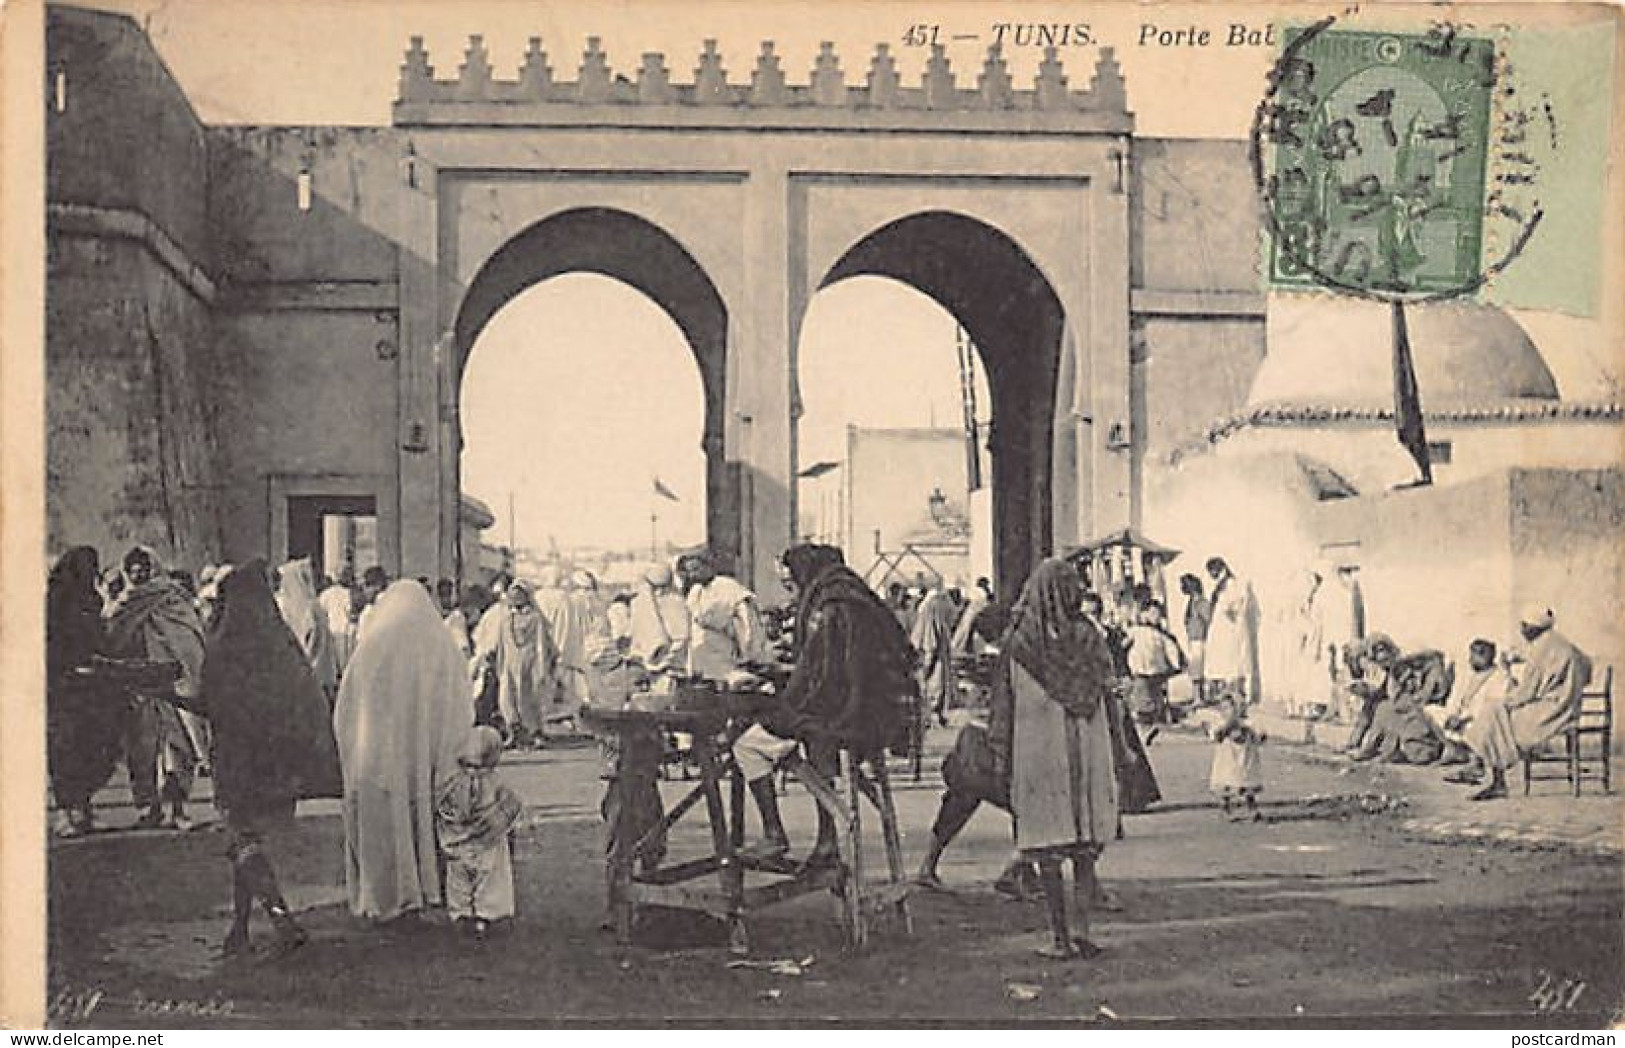 TUNIS - Rémouleur - Porte Bab Alioua - Ed. ND Neurdein 451 - Tunisia